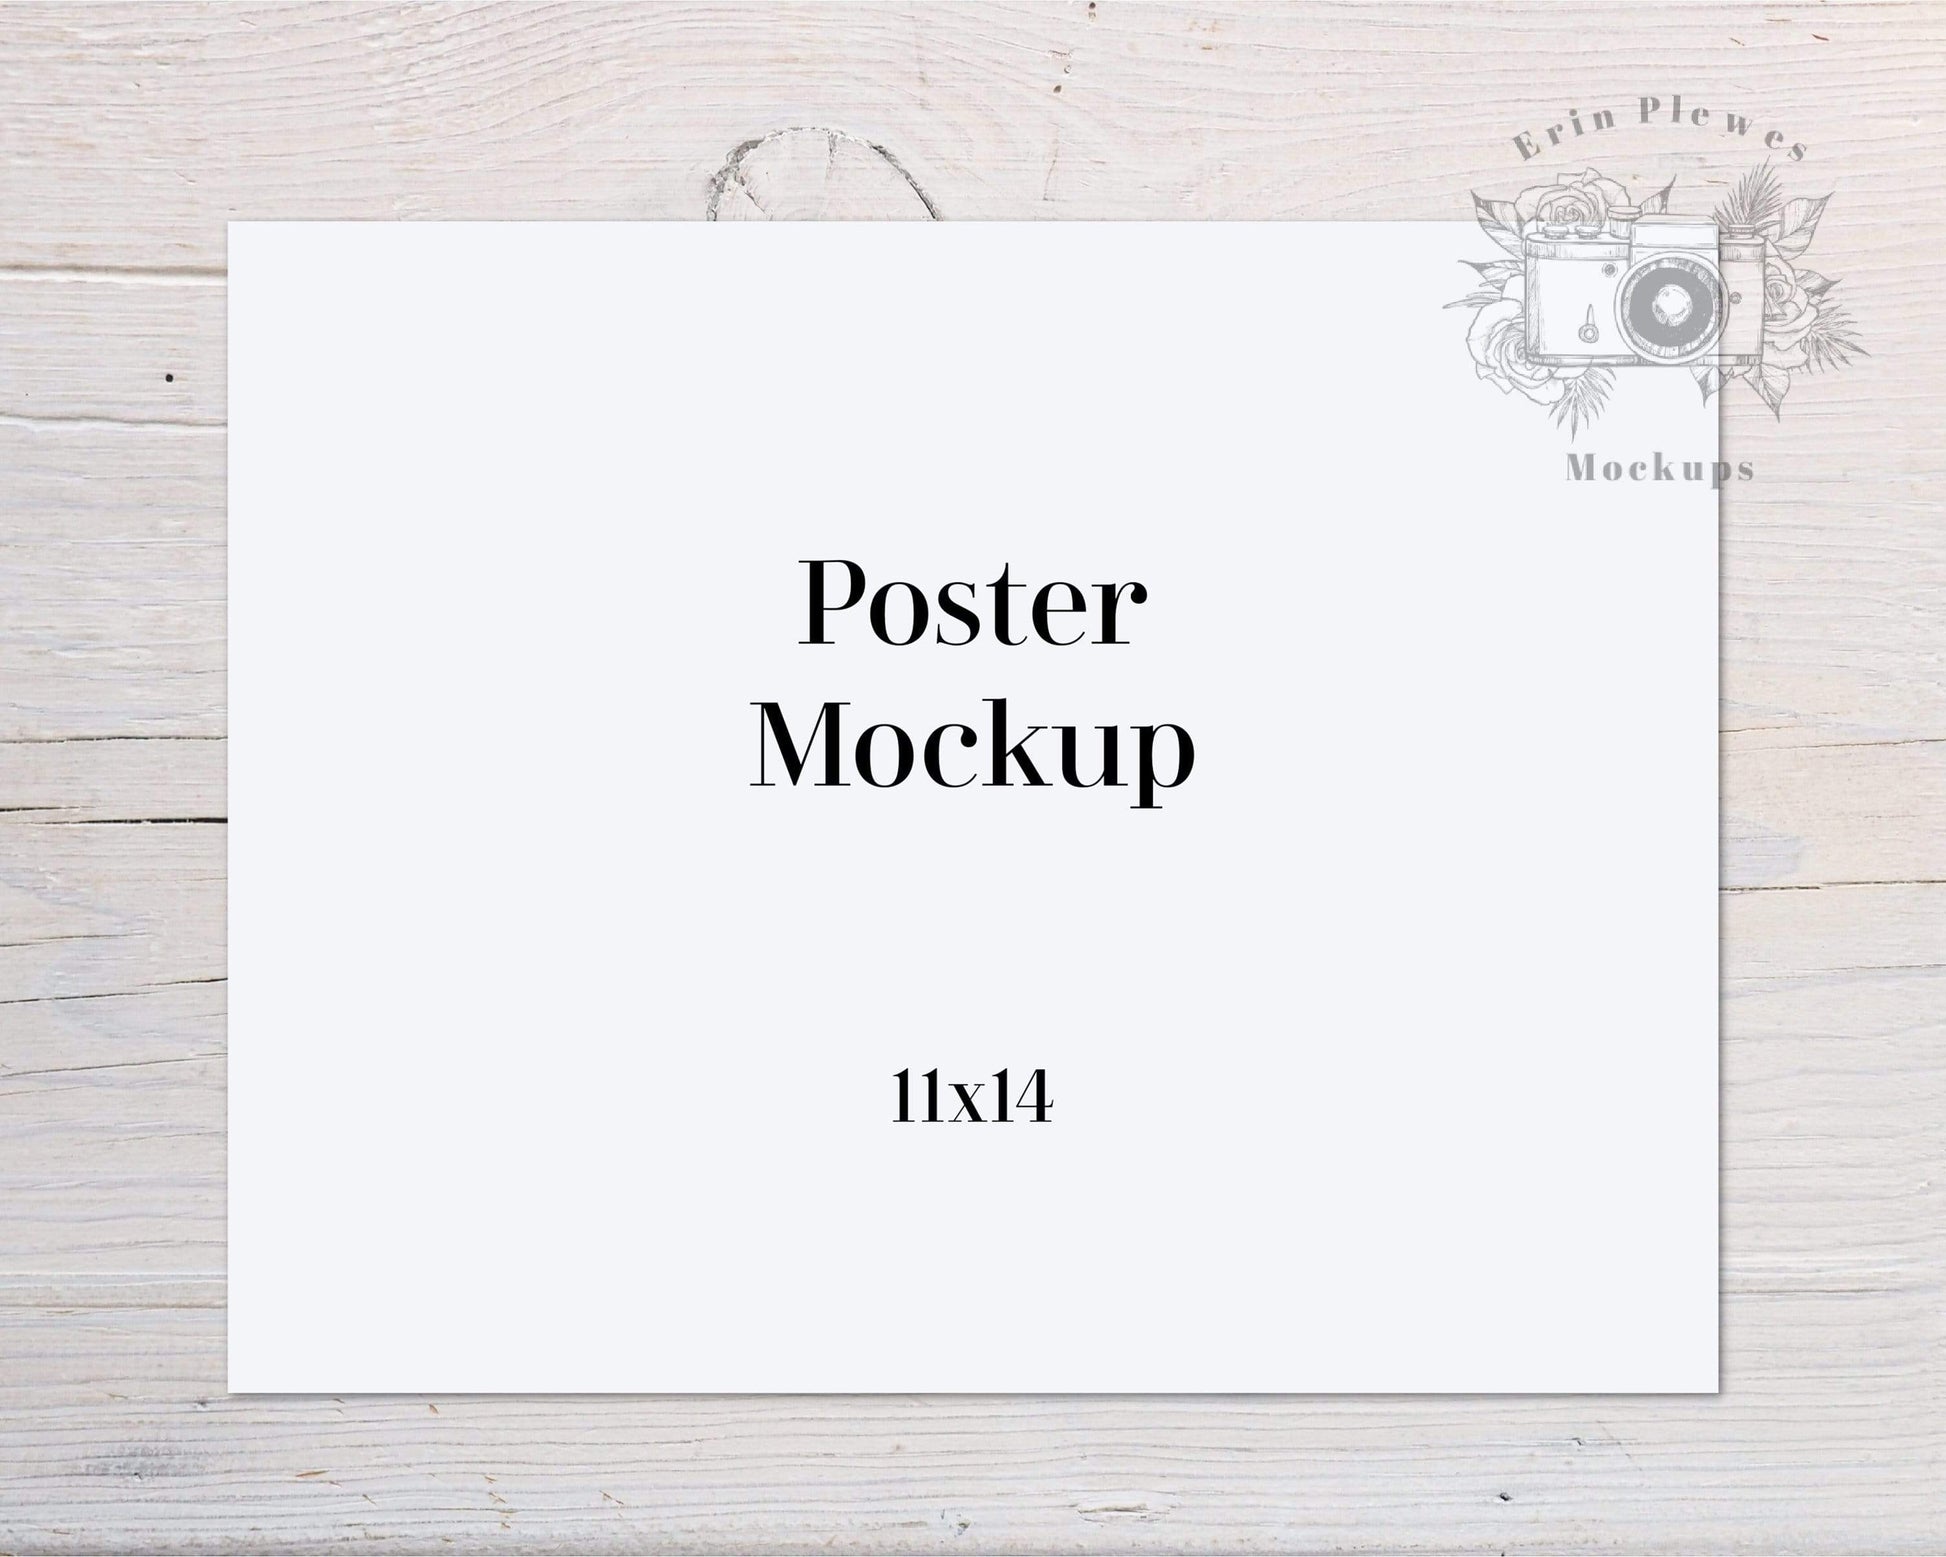 Erin Plewes Mockups Print Mockup 11x14, Poster Mock Up,  Rustic Farmhouse Style Stationary Mock-up, Instant Digital Download Template